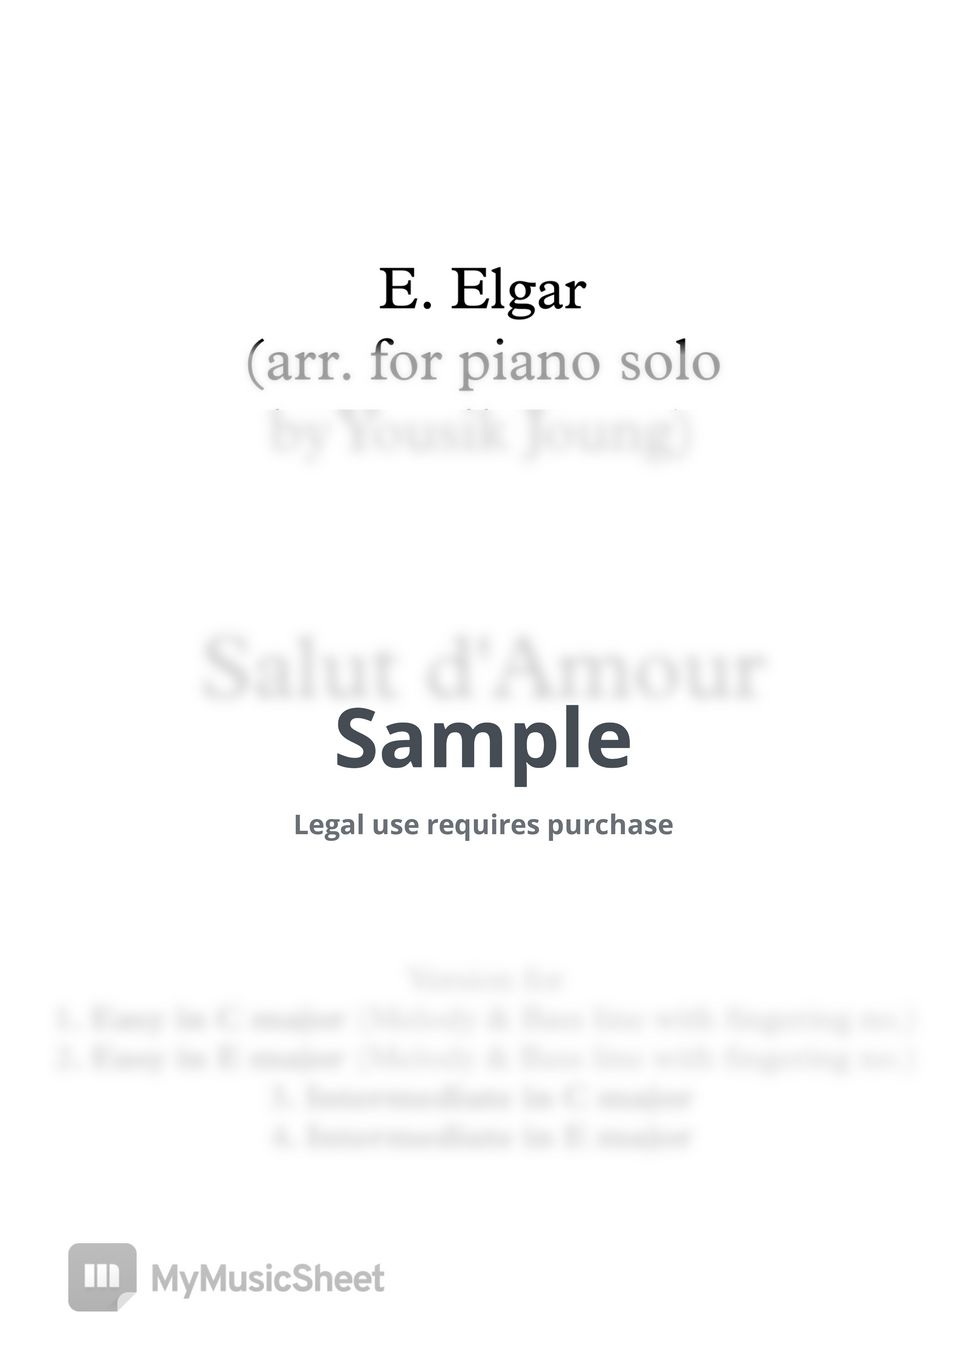 Edward Elgar - Salut d'Amour (C Major & E Major easy ver.) by Yousik Joung